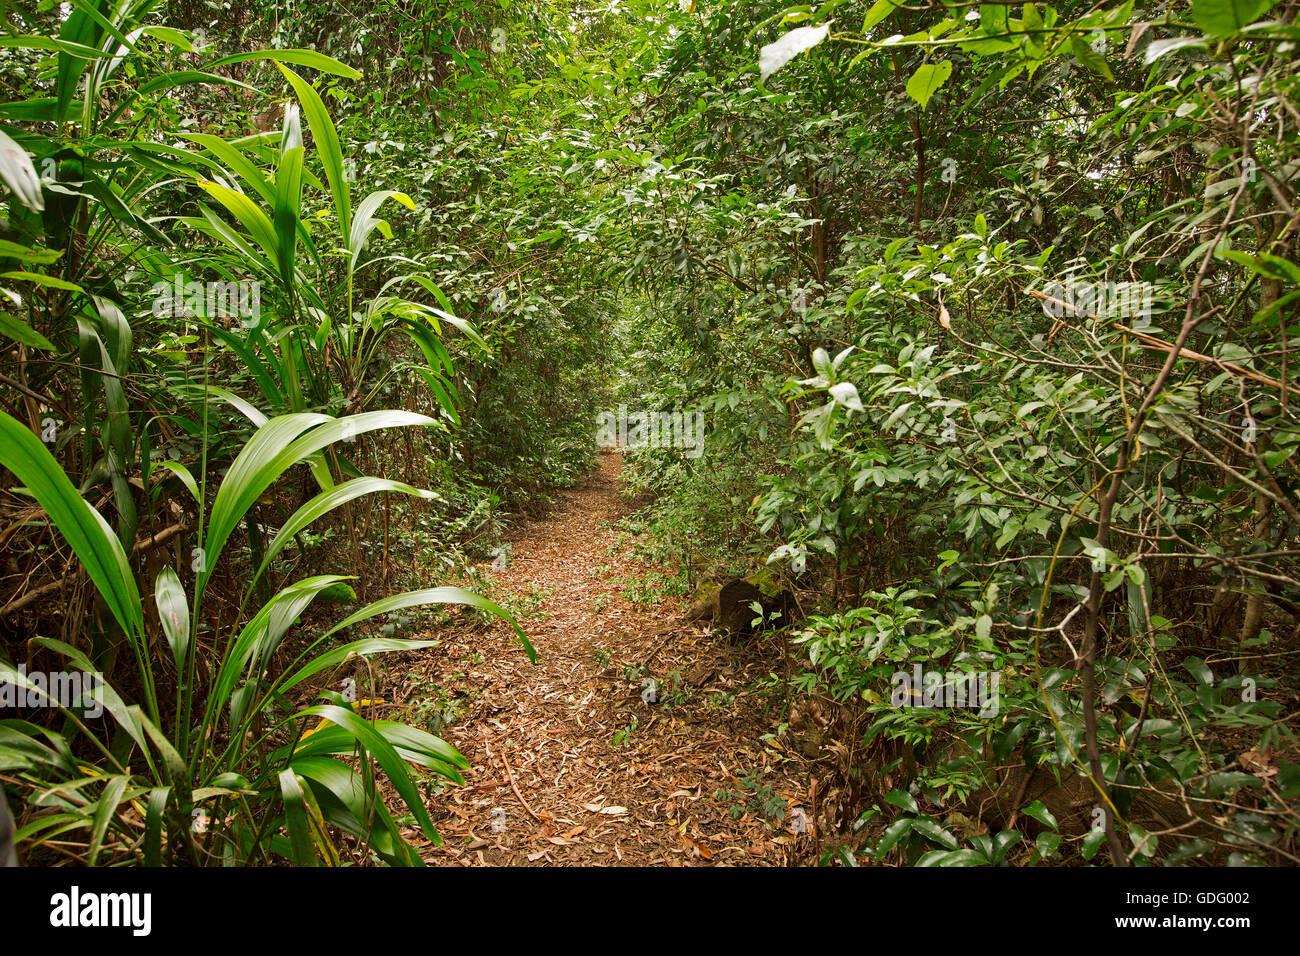 Narrow walking track spearing through dense vivid green tangle of vegetation in sub-tropical rainforest / jungle in Australia Stock Photo